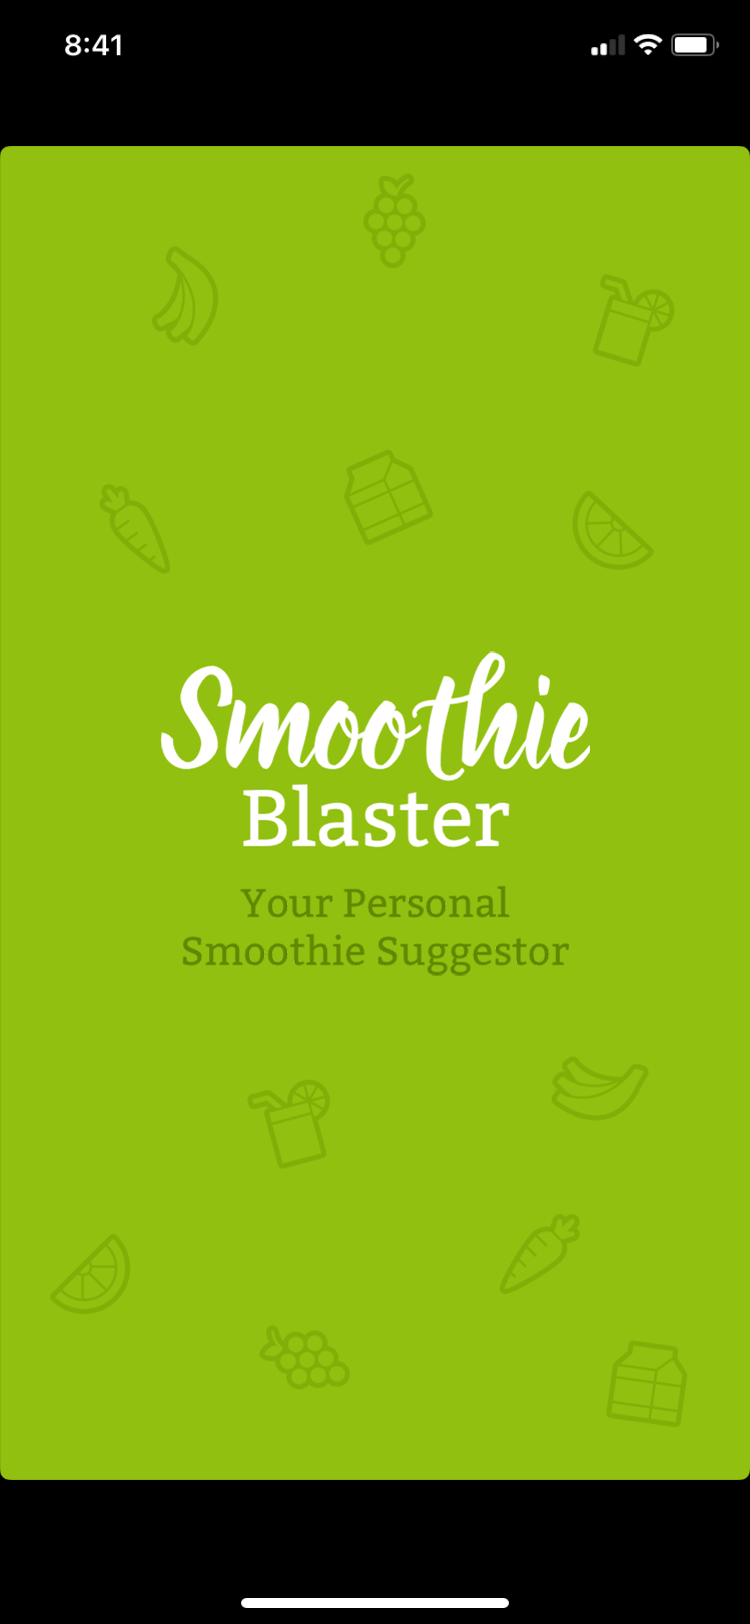 Smoothie Blaster app home screen